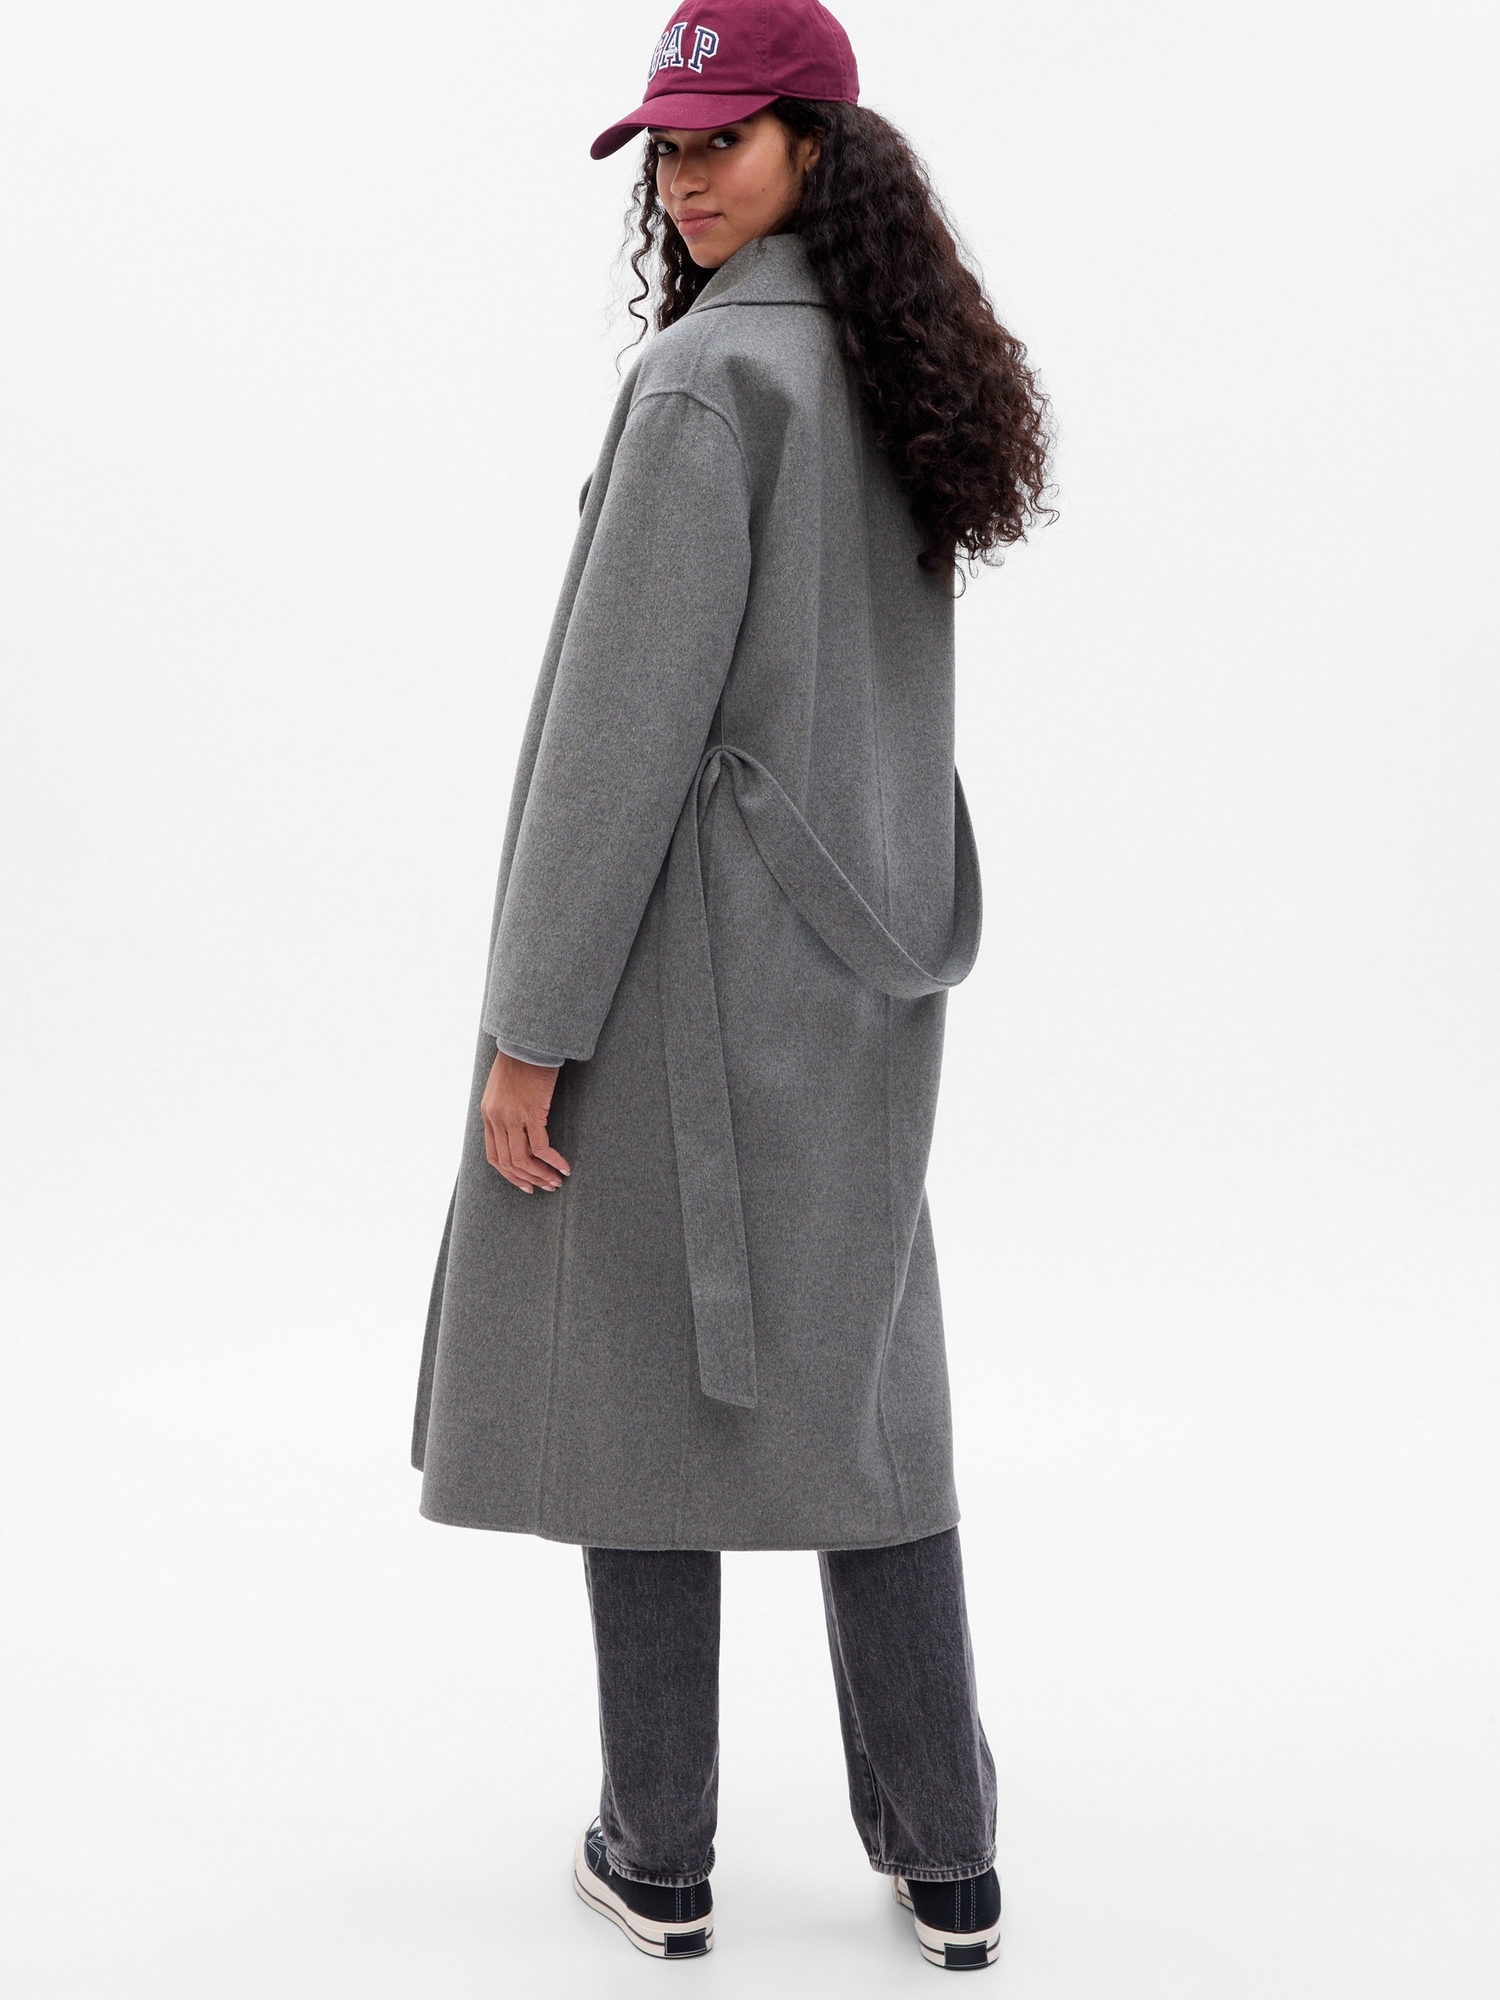 Black Wool Coat, Fit and Flare Coat, Knee Length Winter Coat